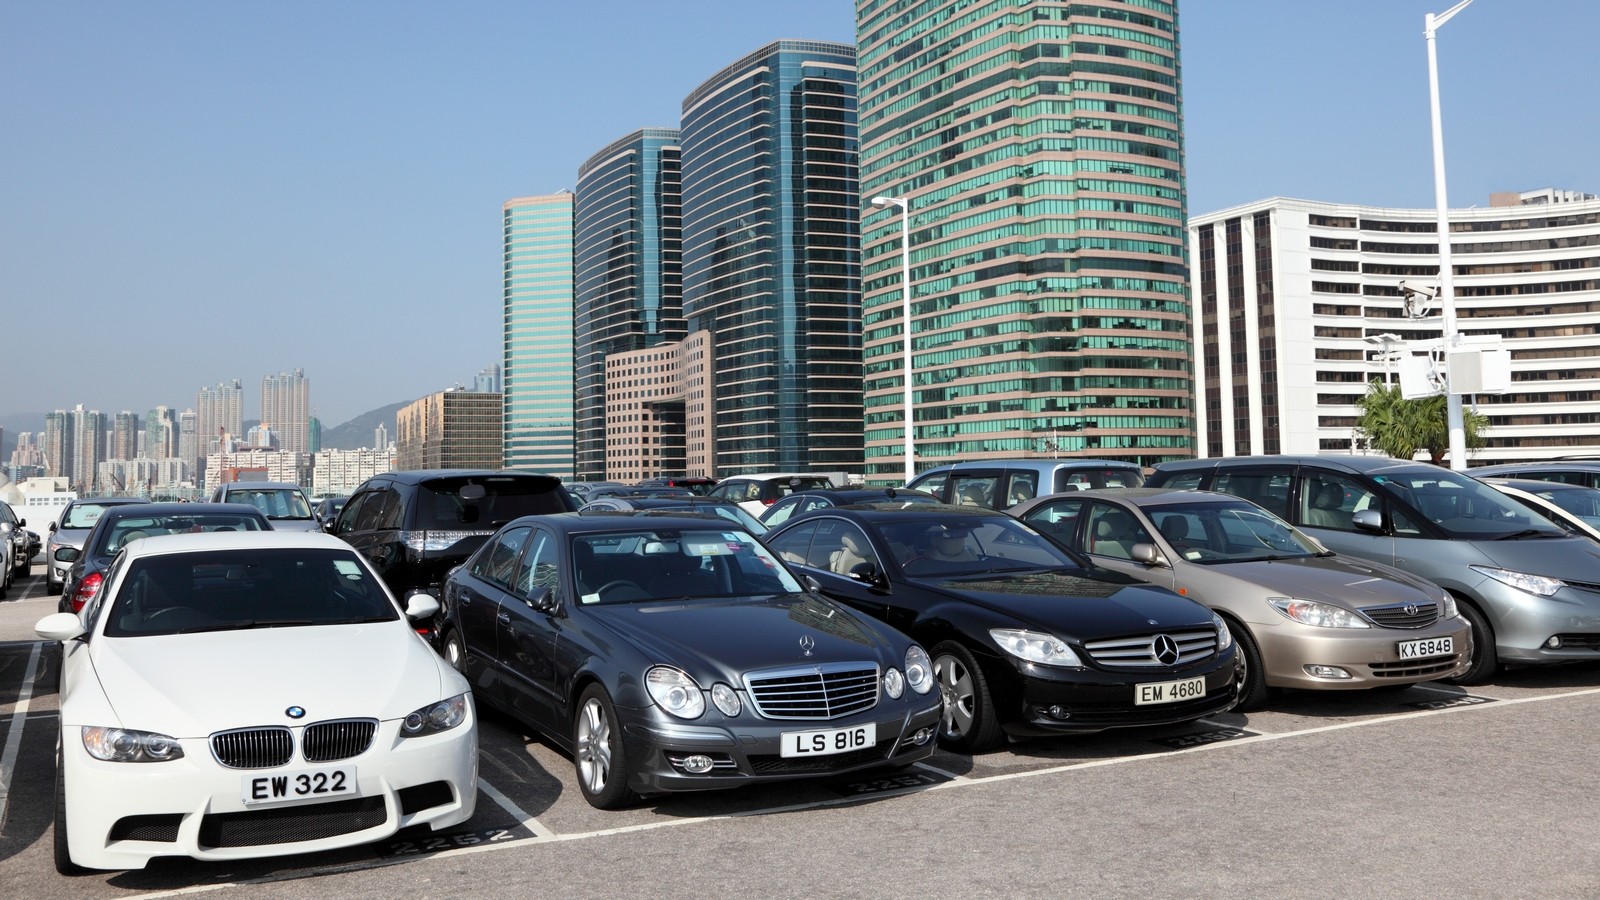 Luxury cars in parking lot in Hong Kong